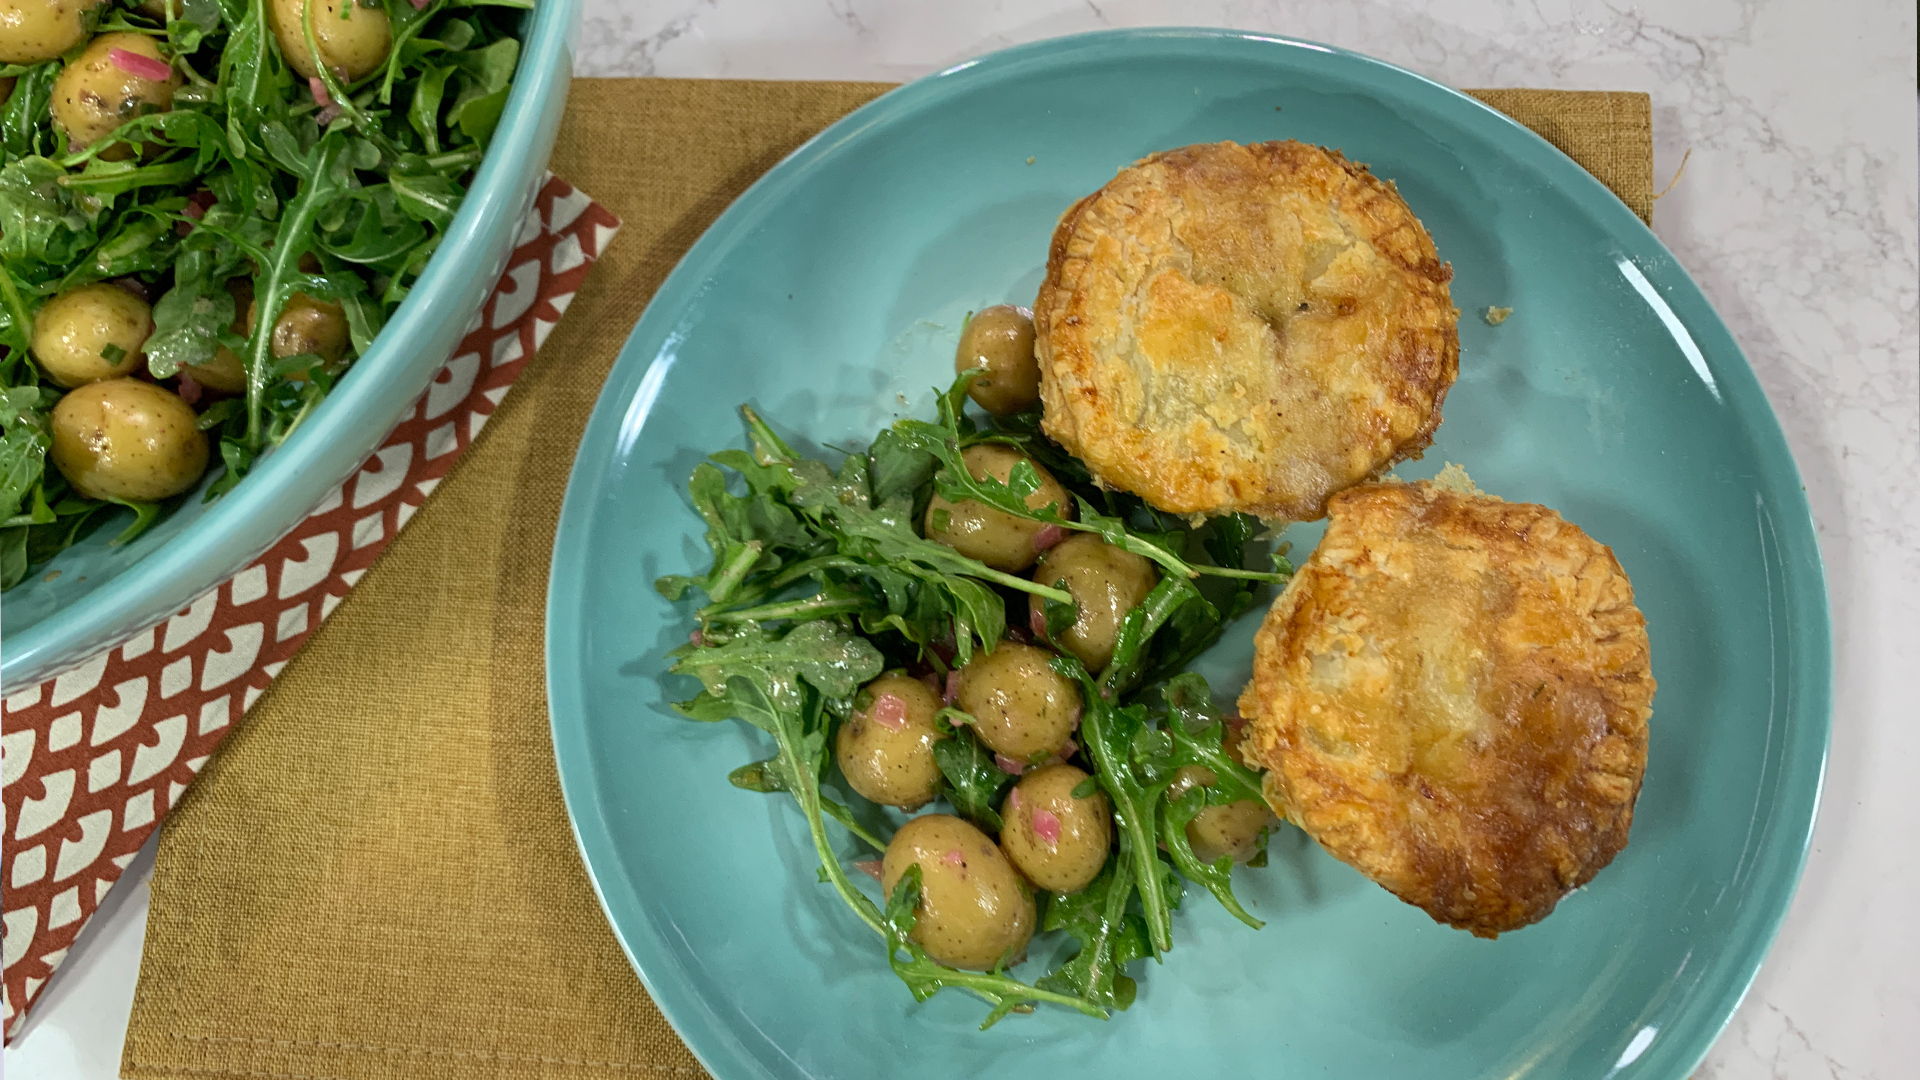 Lamb and cheddar pies and potato salad with arugula and Dijon